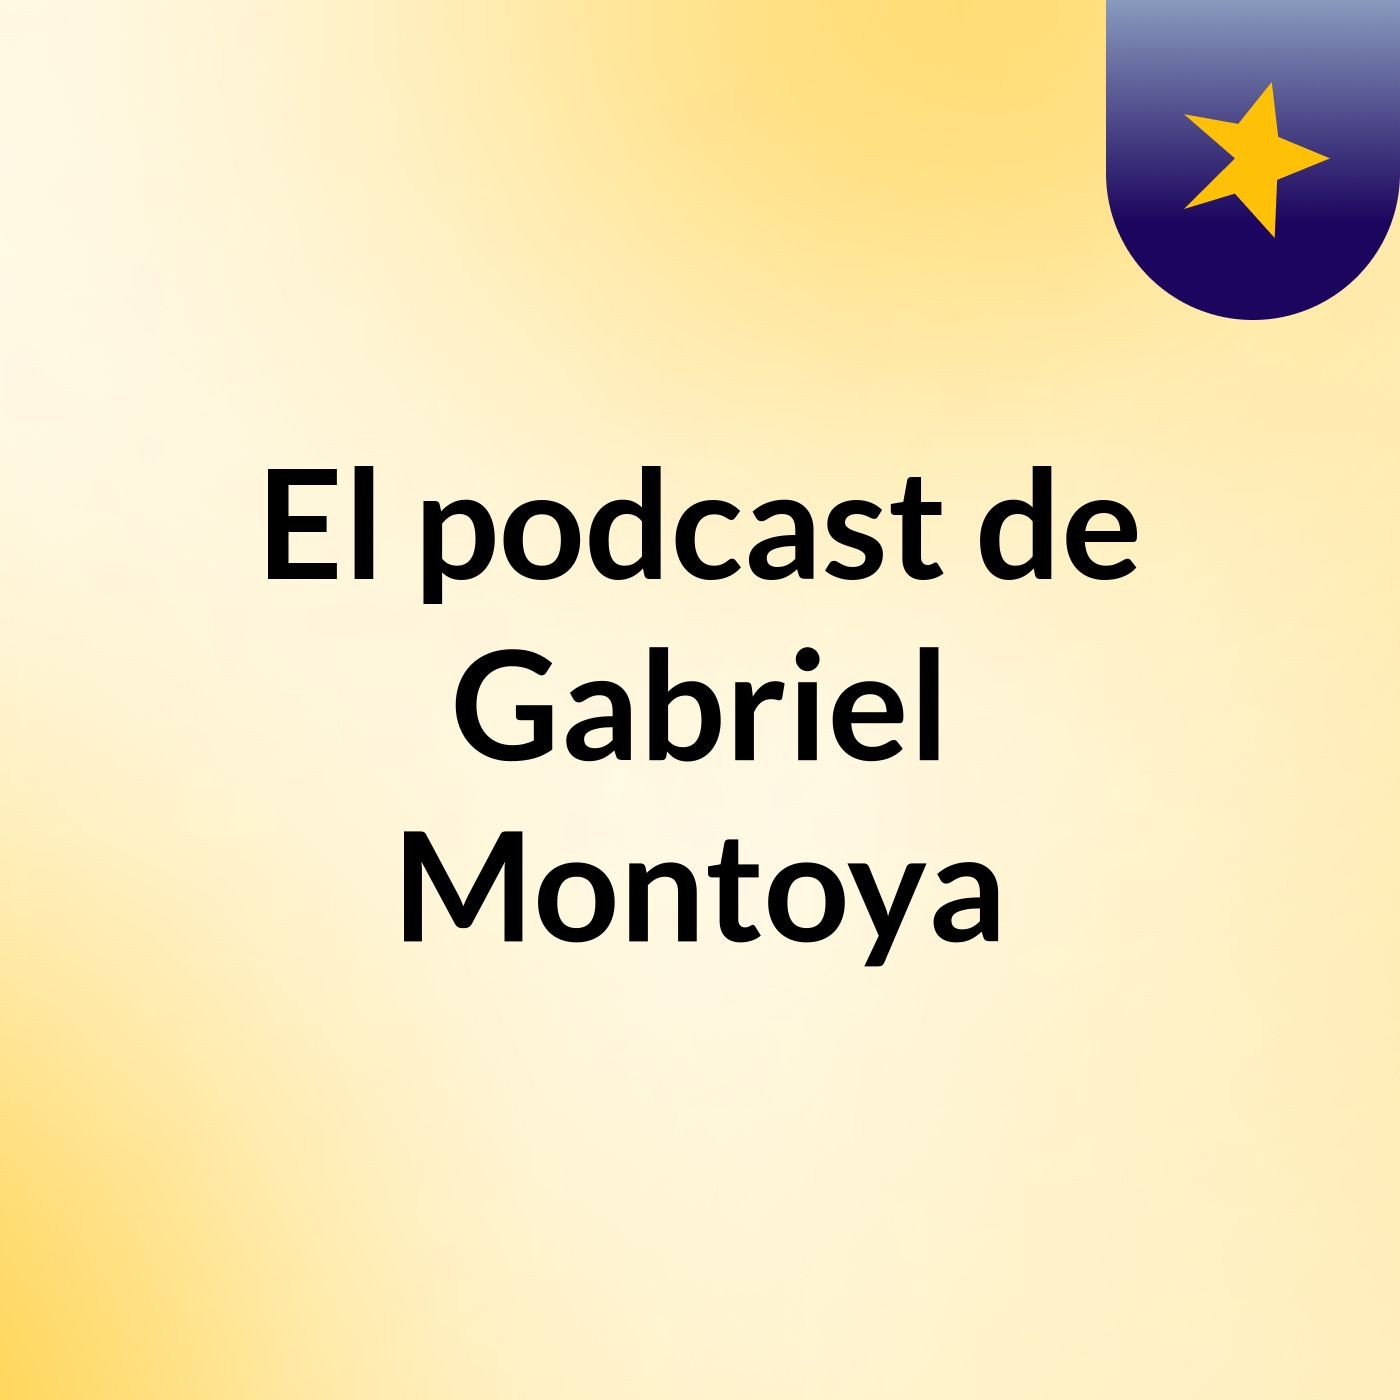 El podcast de Gabriel Montoya